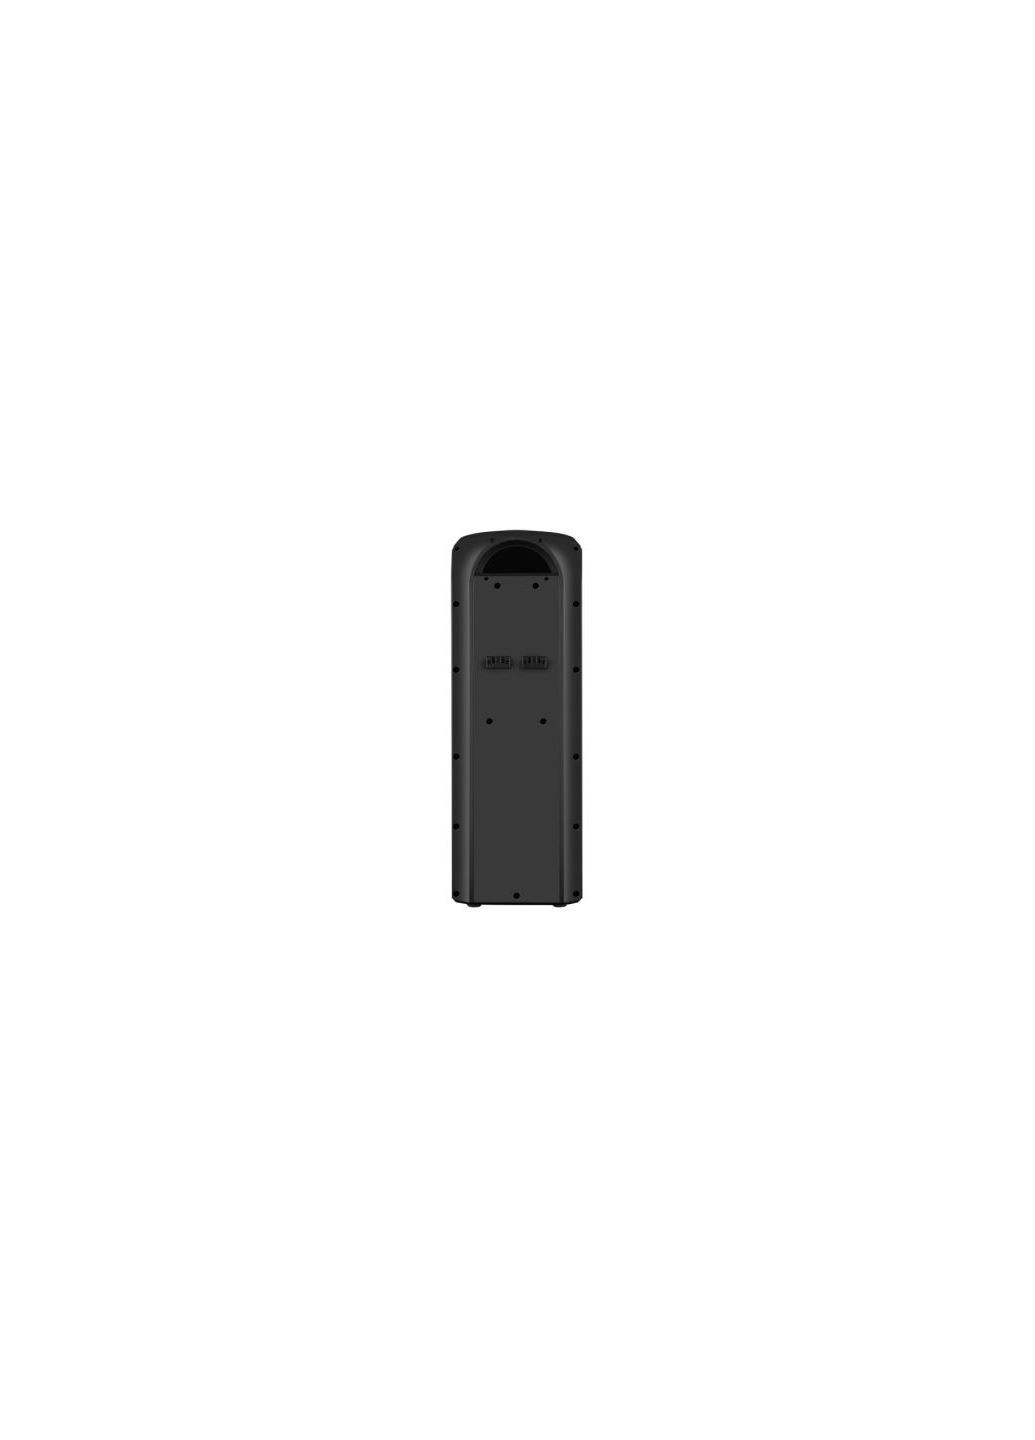 Акустическая система PS750 Black Sven ps-750 black (275079322)